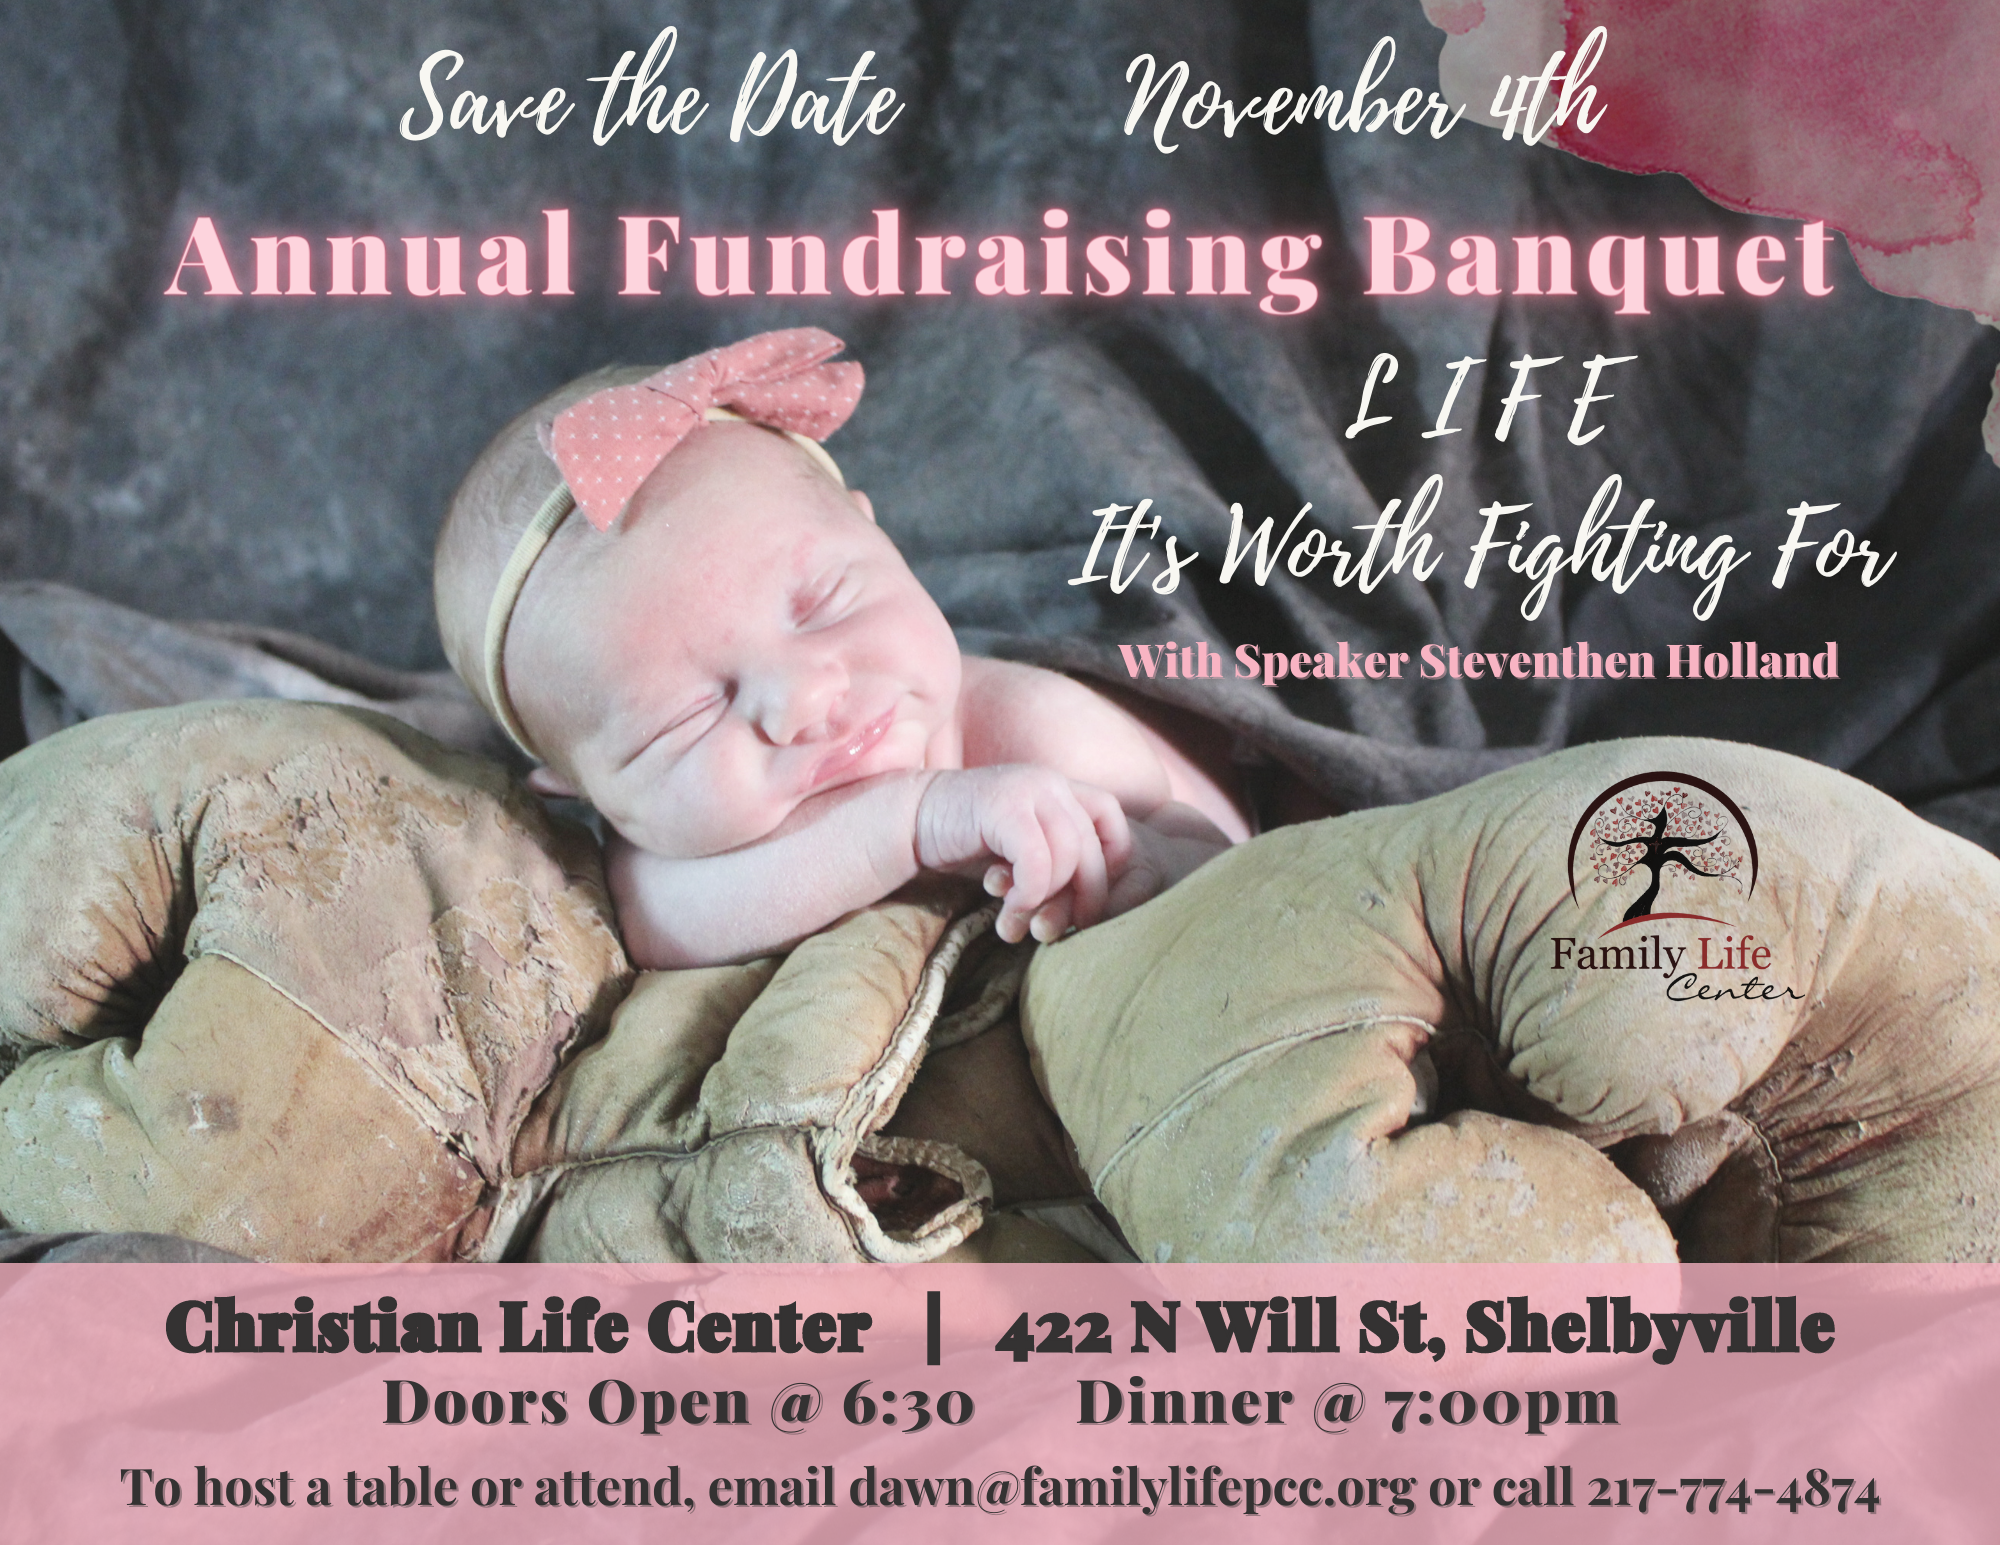 Family Life Center Fundraising Banquet November 4th